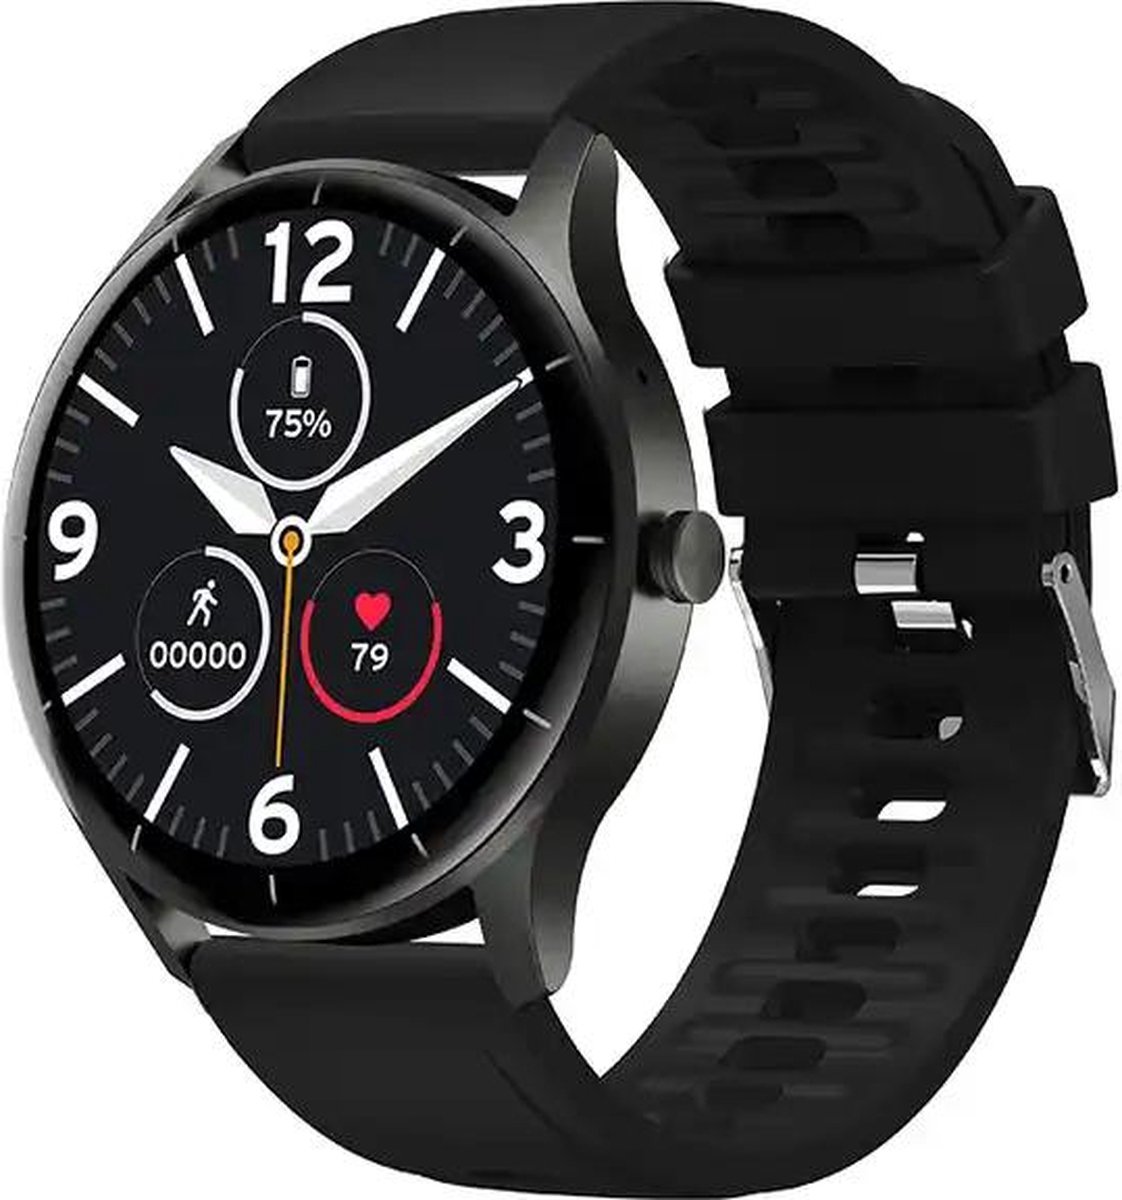 Smartwatch Dames - Smartwatch Heren - Smartwatch - Stappenteller - Fitness Tracker - Activity Tracker - Smartwatch Android & IOS - J&D supplies